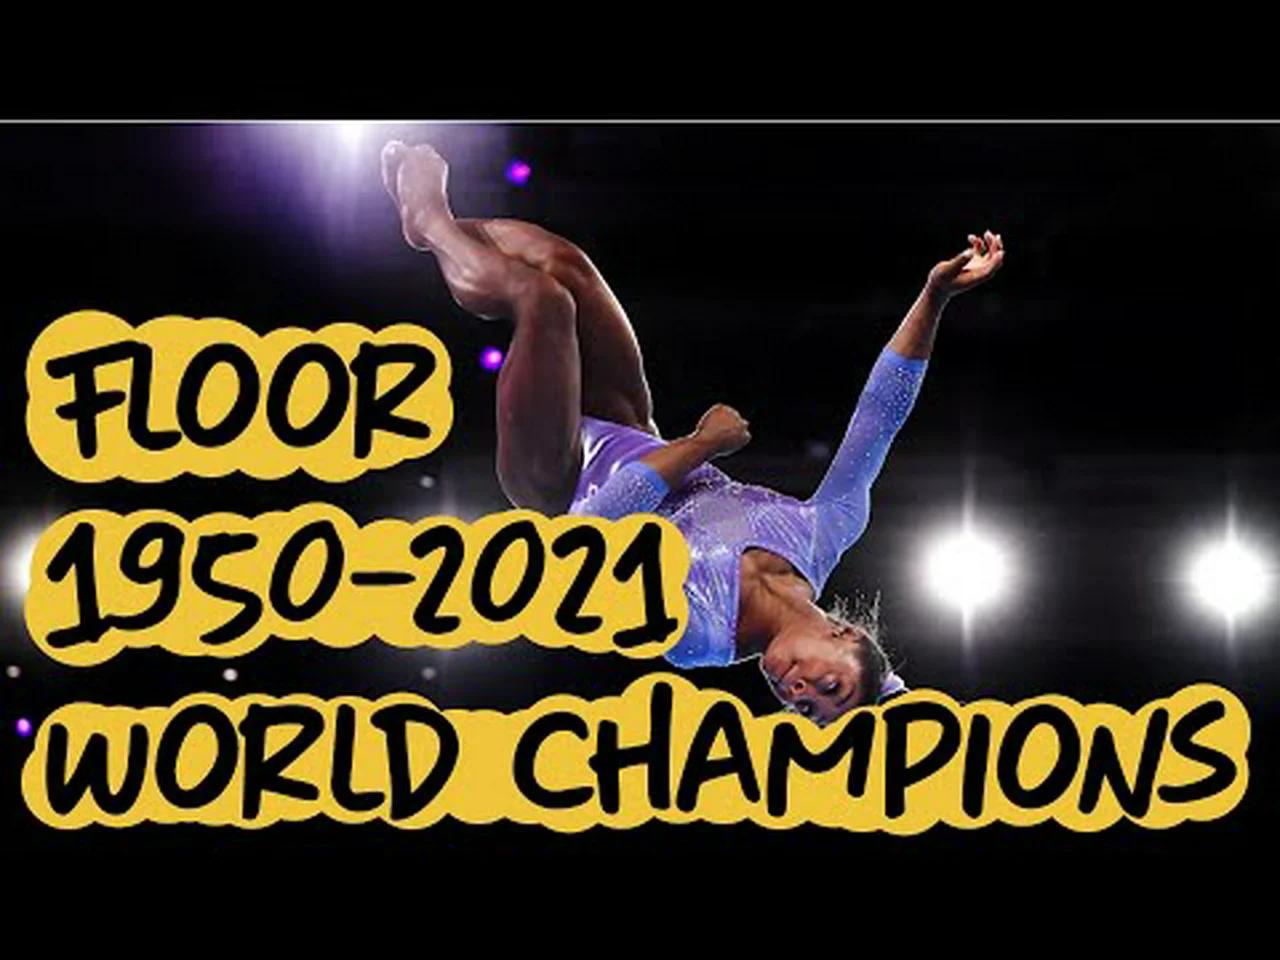 all-gymnastics-world-champions-on-floor-1950-2021